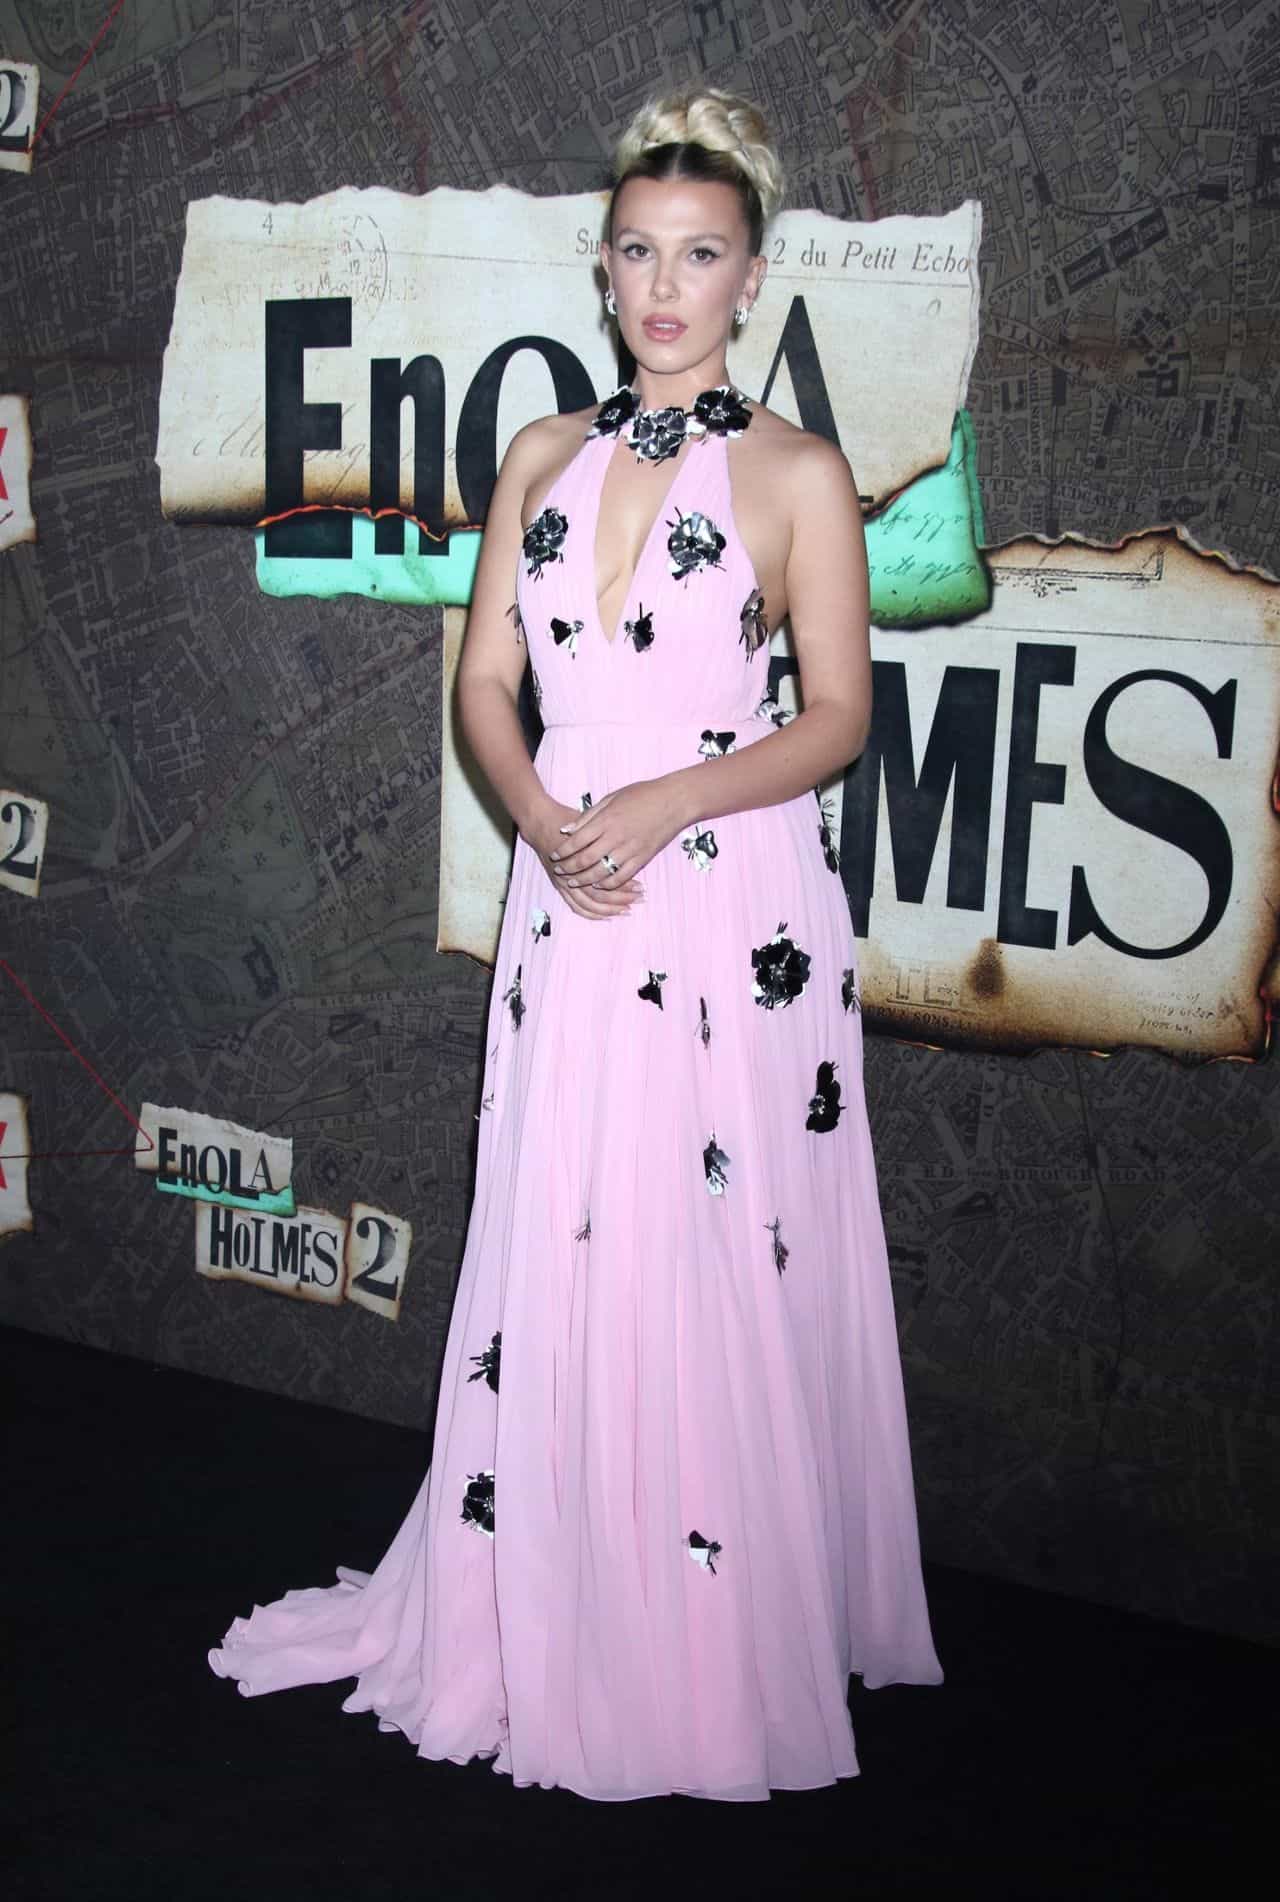 Millie Bobby Brown in Louis Vuitton Dress at Enola Holmes 2 Premiere